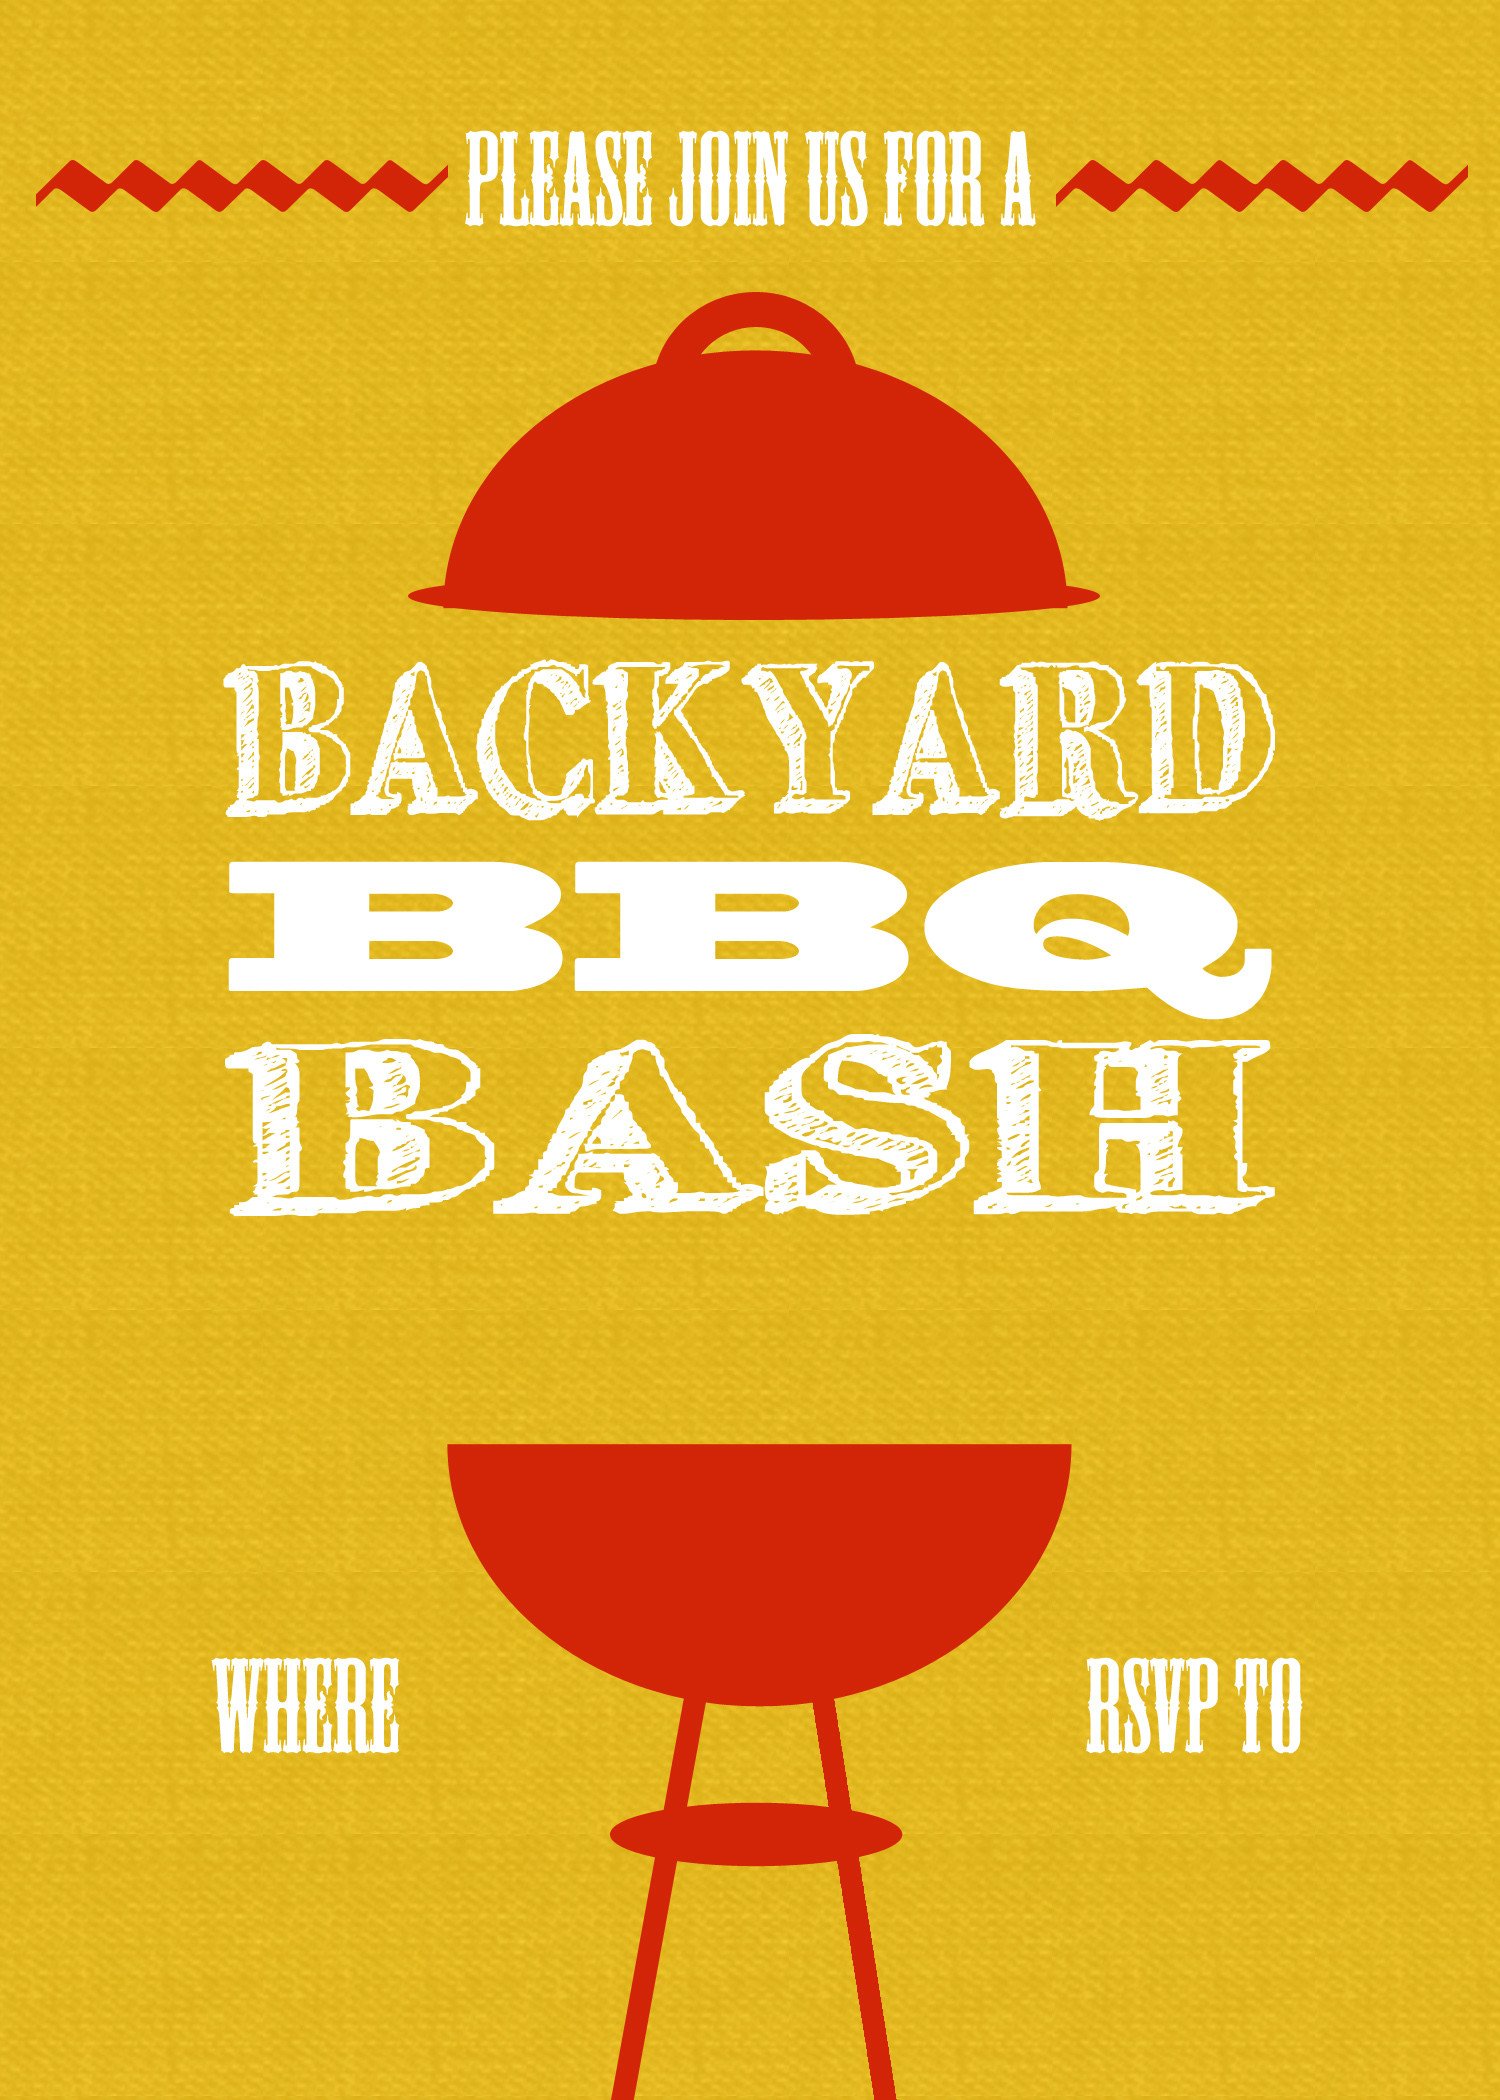 DIY Printable Backyard BBQ Bash Invite